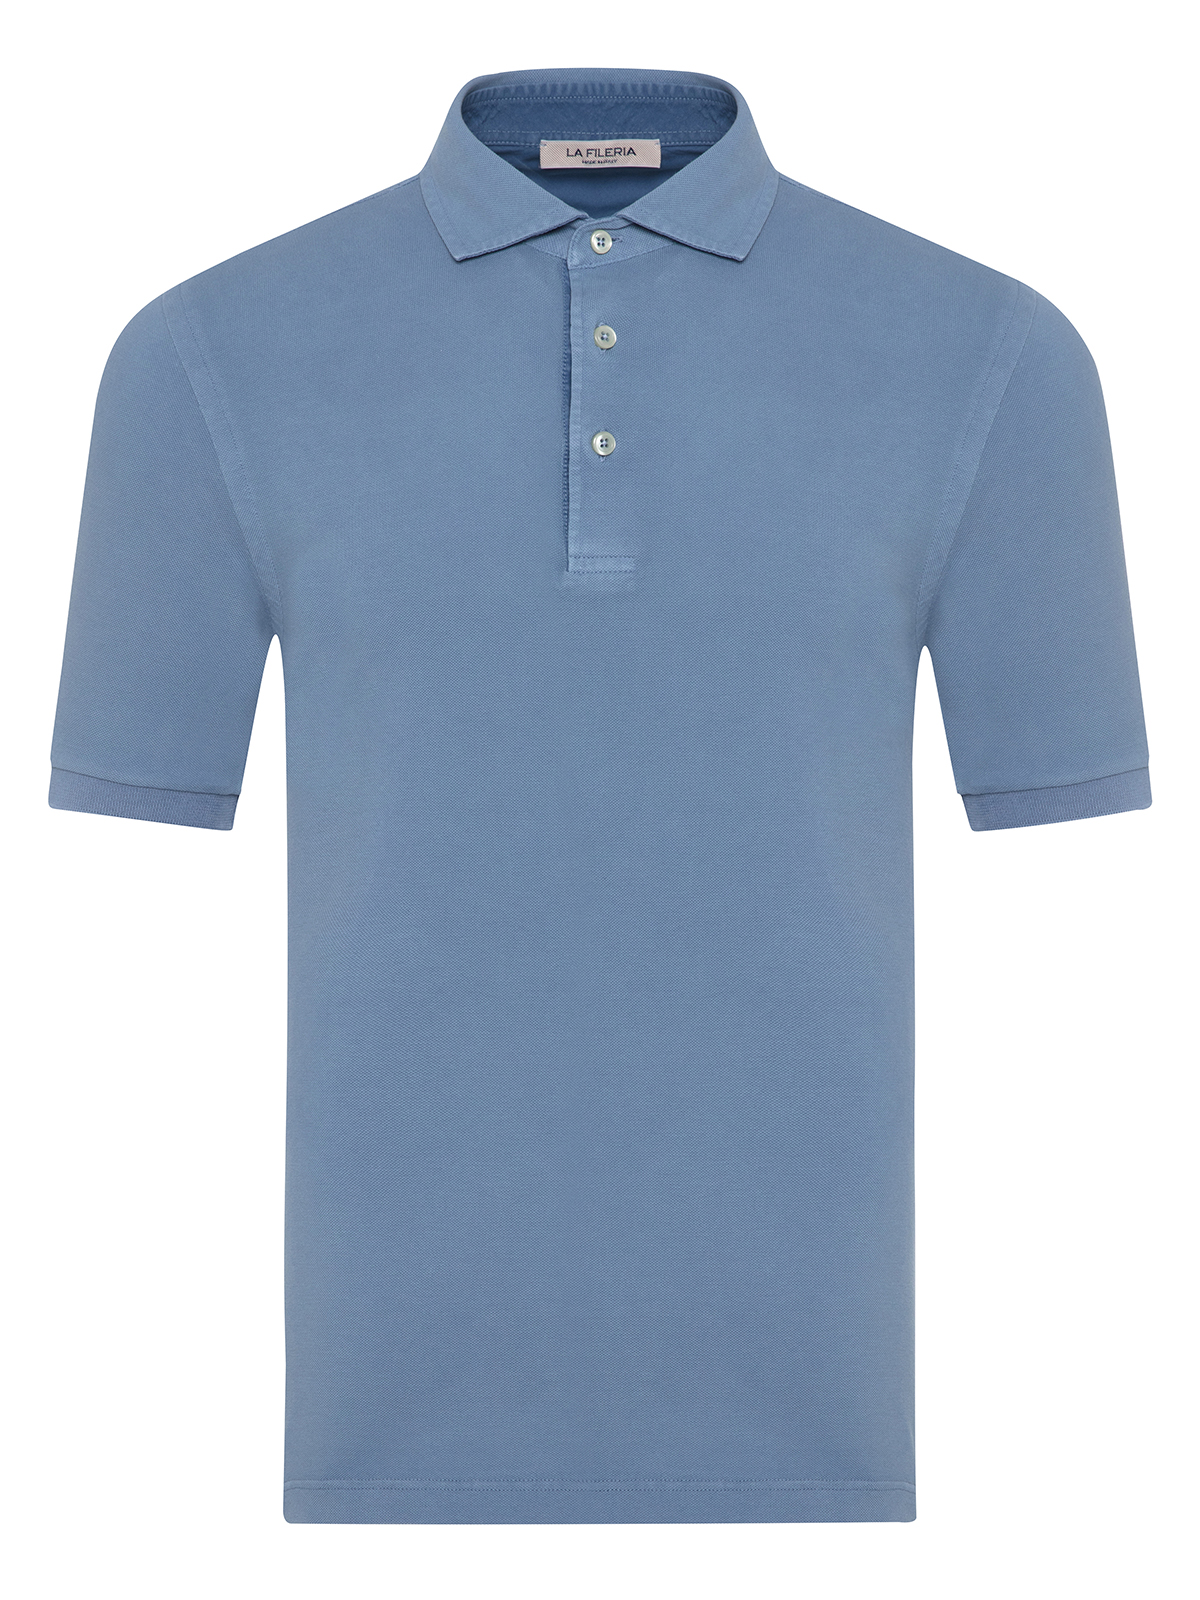 La Fileria - La Fileria Mavi Vintage Gömlek Yaka Pamuk Slim Fit Tişört